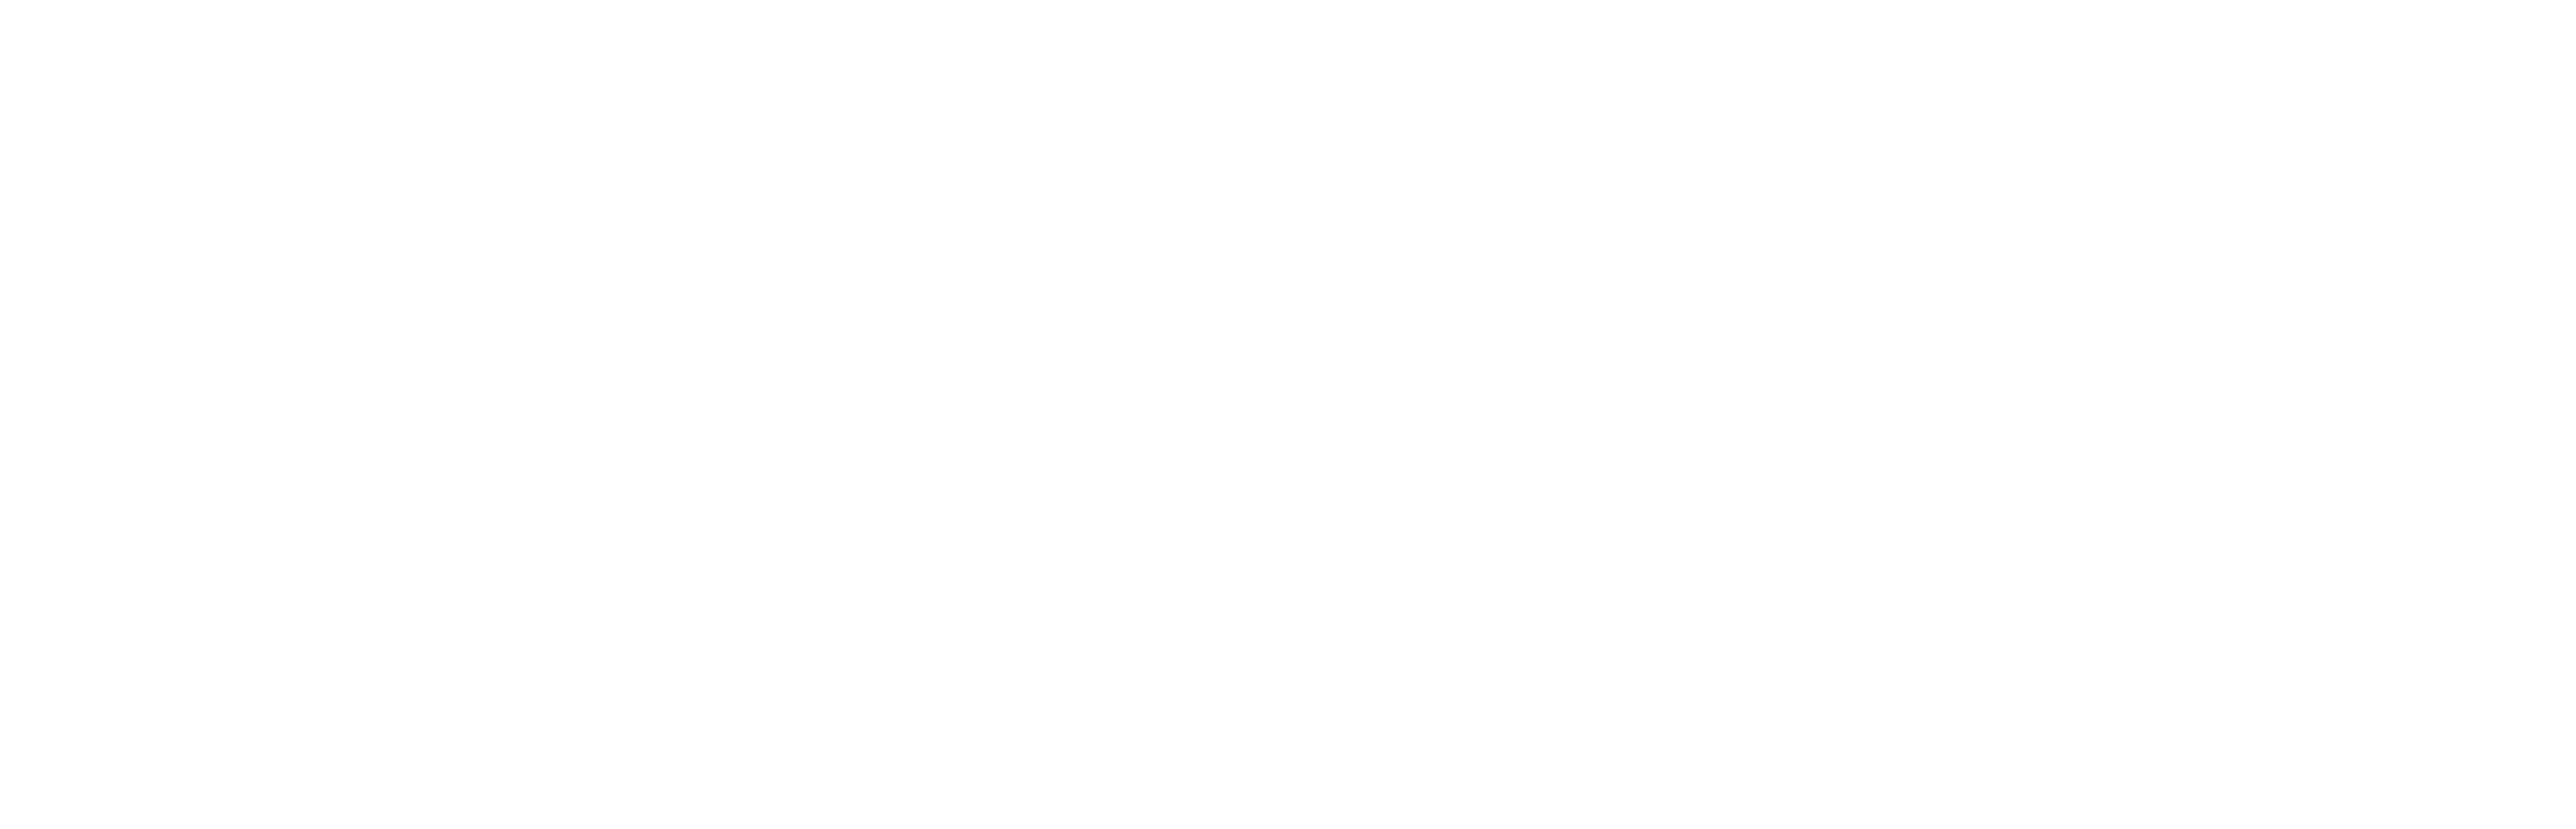 Inversiones meta logo blanco